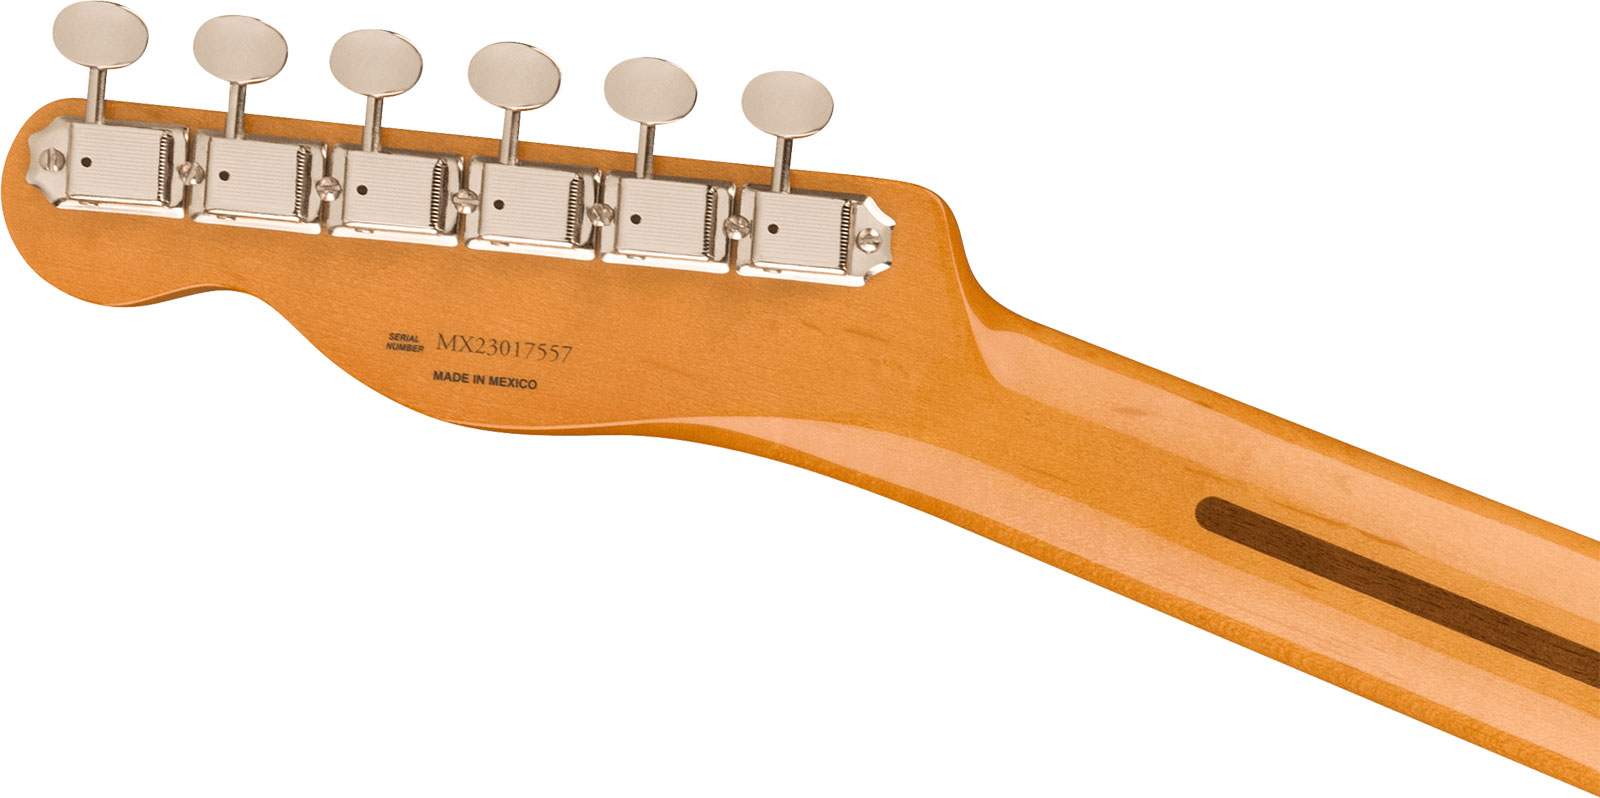 Fender Tele Nocaster 50s Vintera 2 Mex 2s Ht Mn - Blackguard Blonde - Guitarra eléctrica con forma de tel - Variation 3